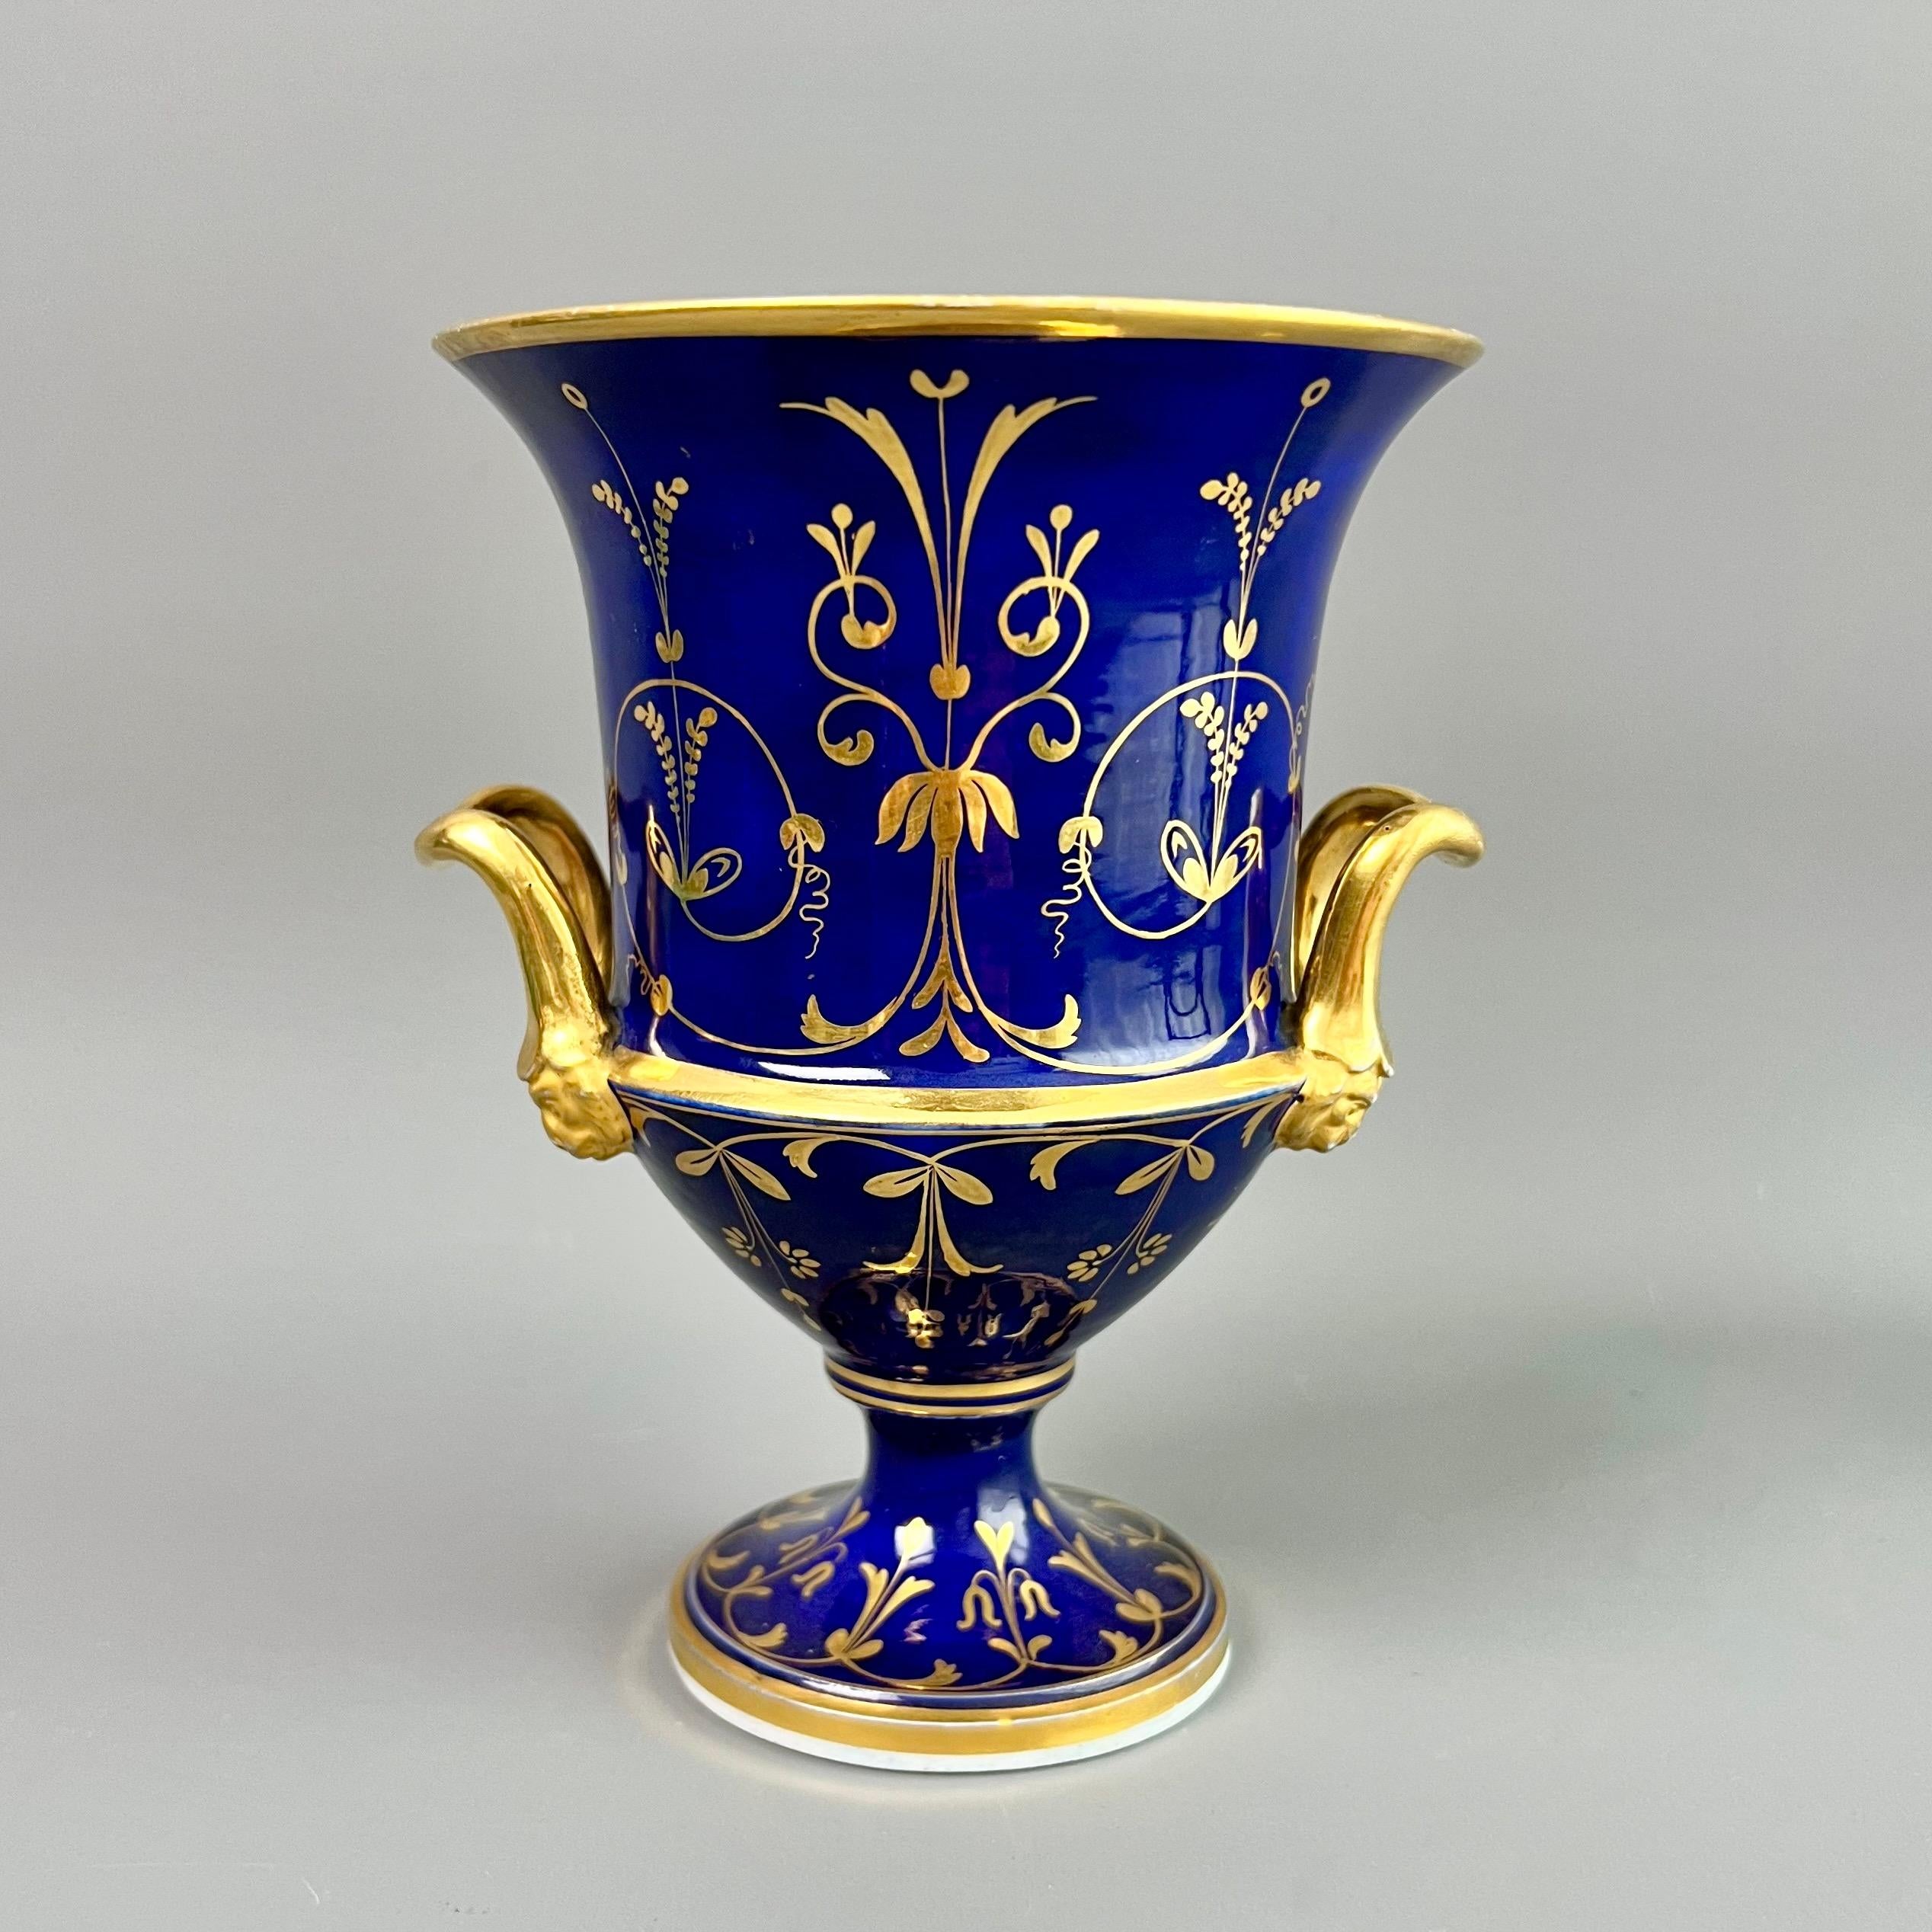 English Coalport Porcelain Campana Vase, Cobalt Blue, Gilt and Flowers, Regency ca 1815